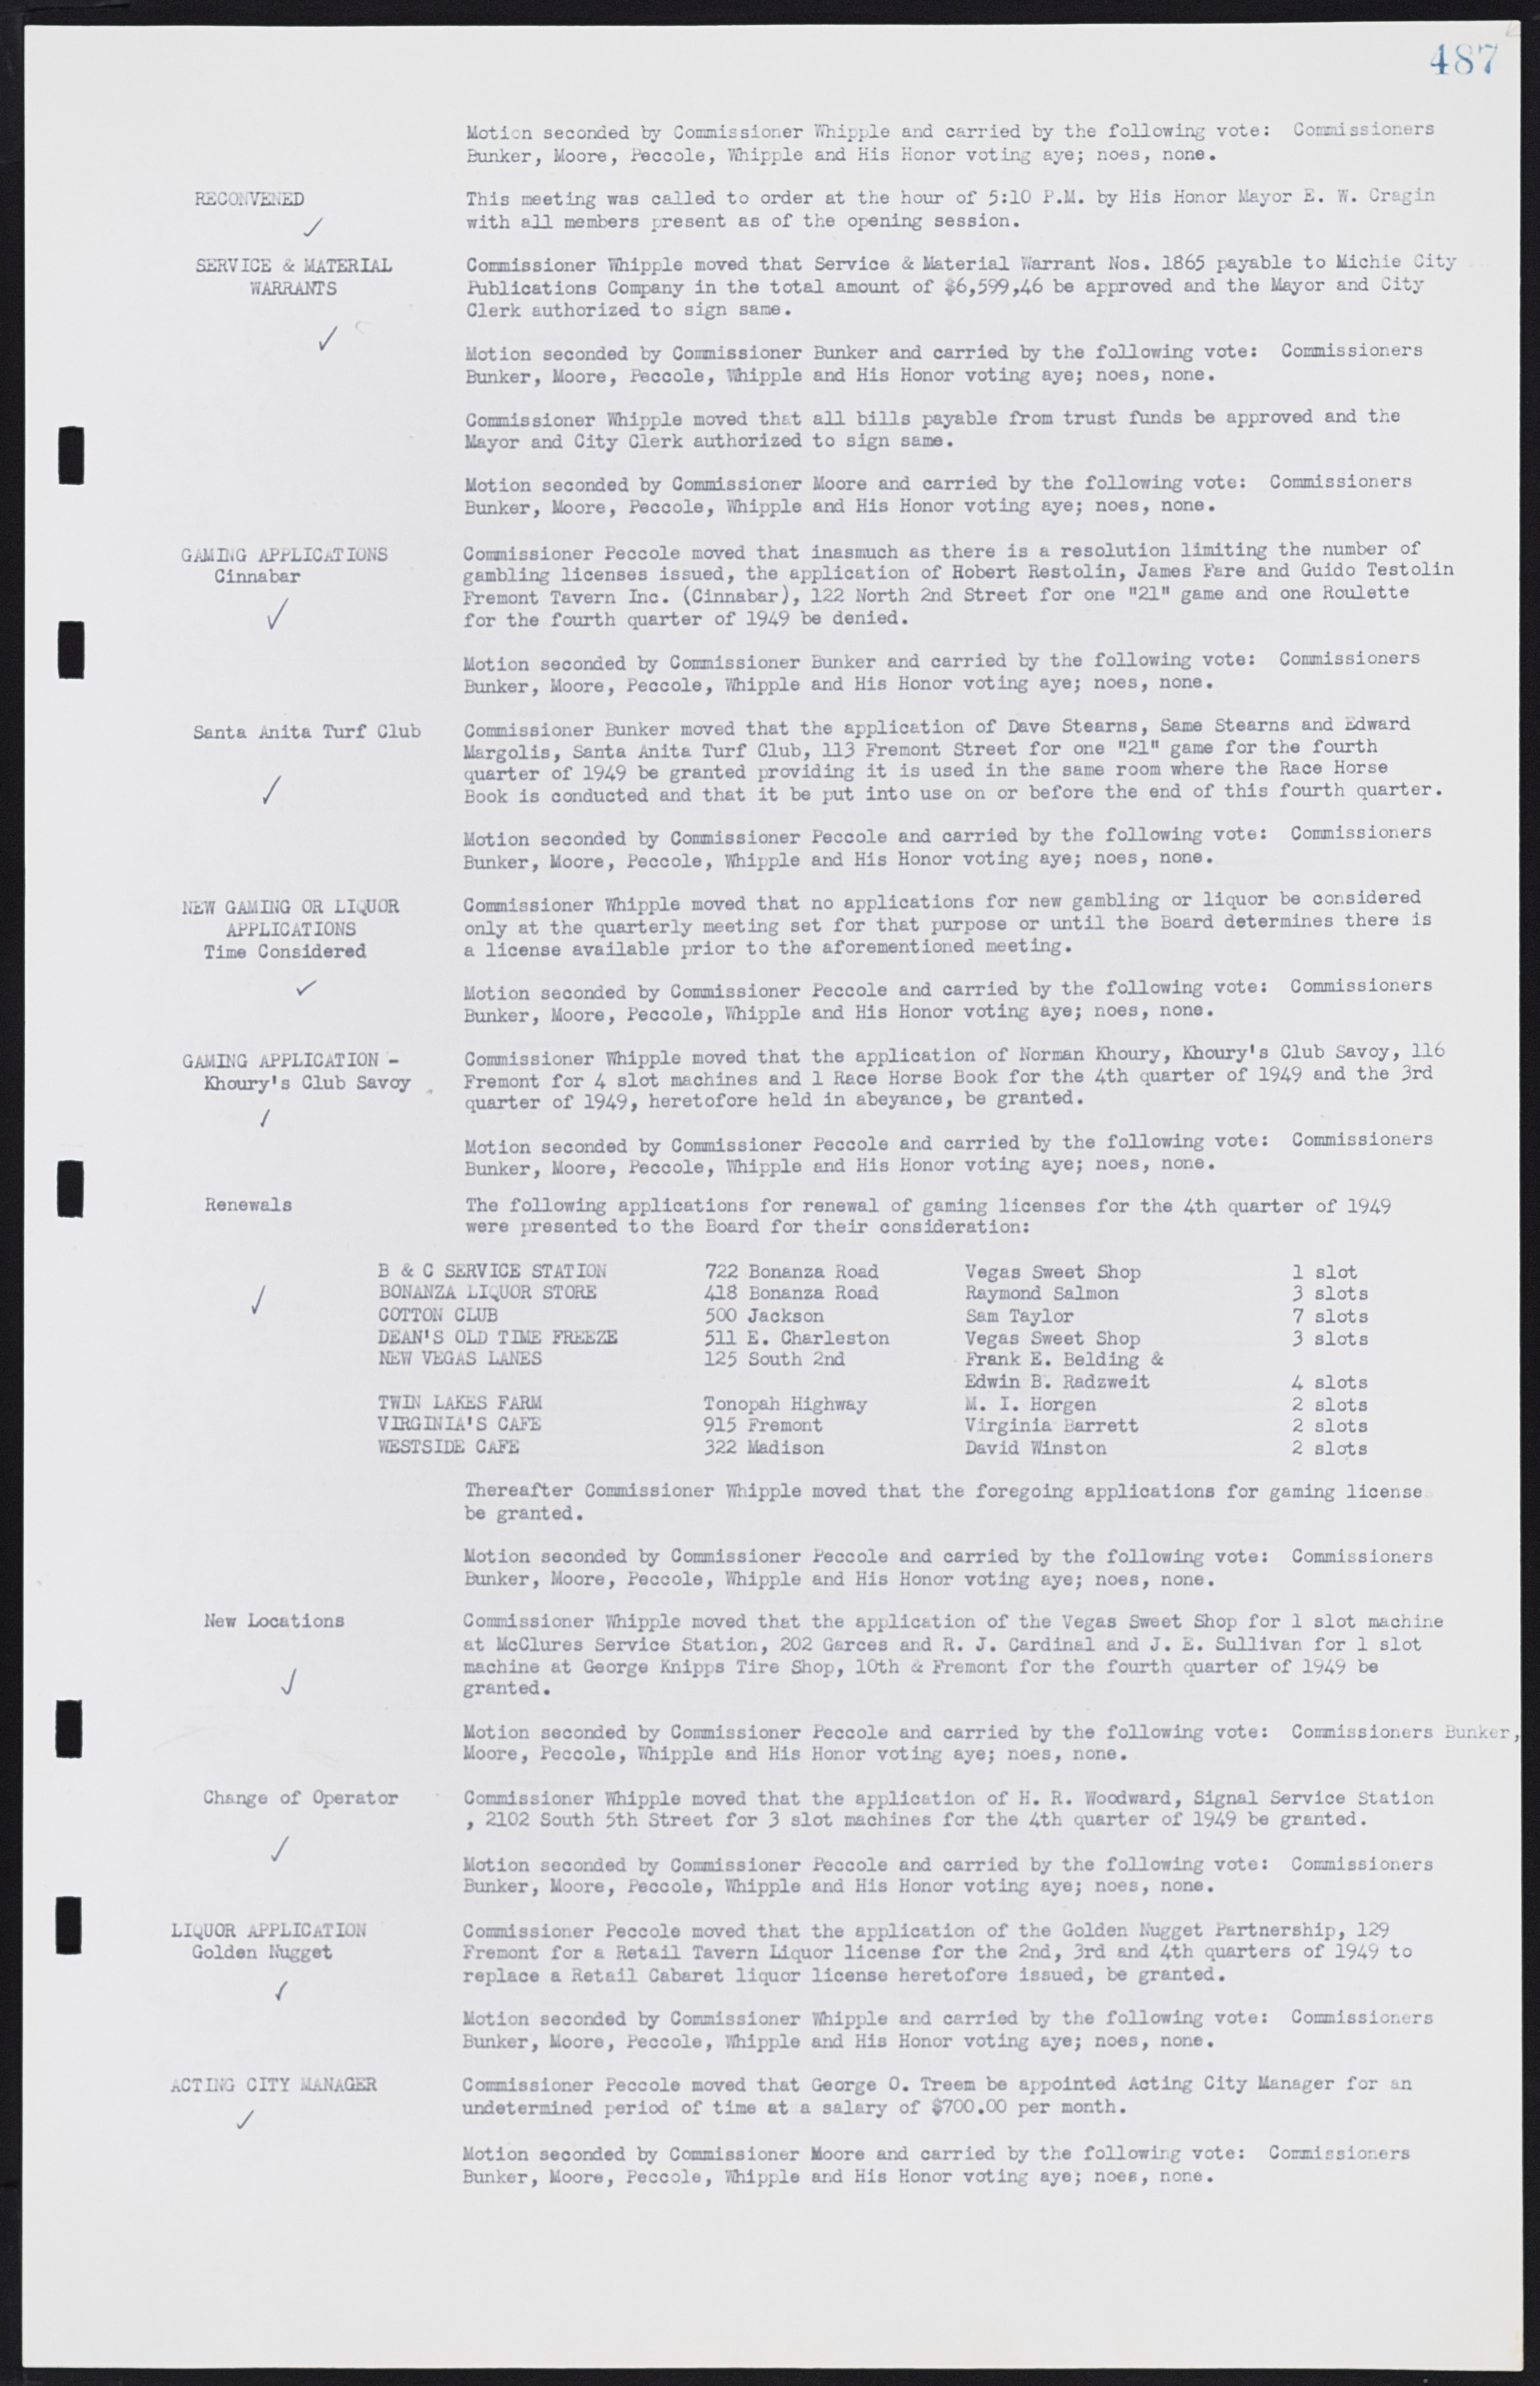 Las Vegas City Commission Minutes, January 7, 1947 to October 26, 1949, lvc000006-519